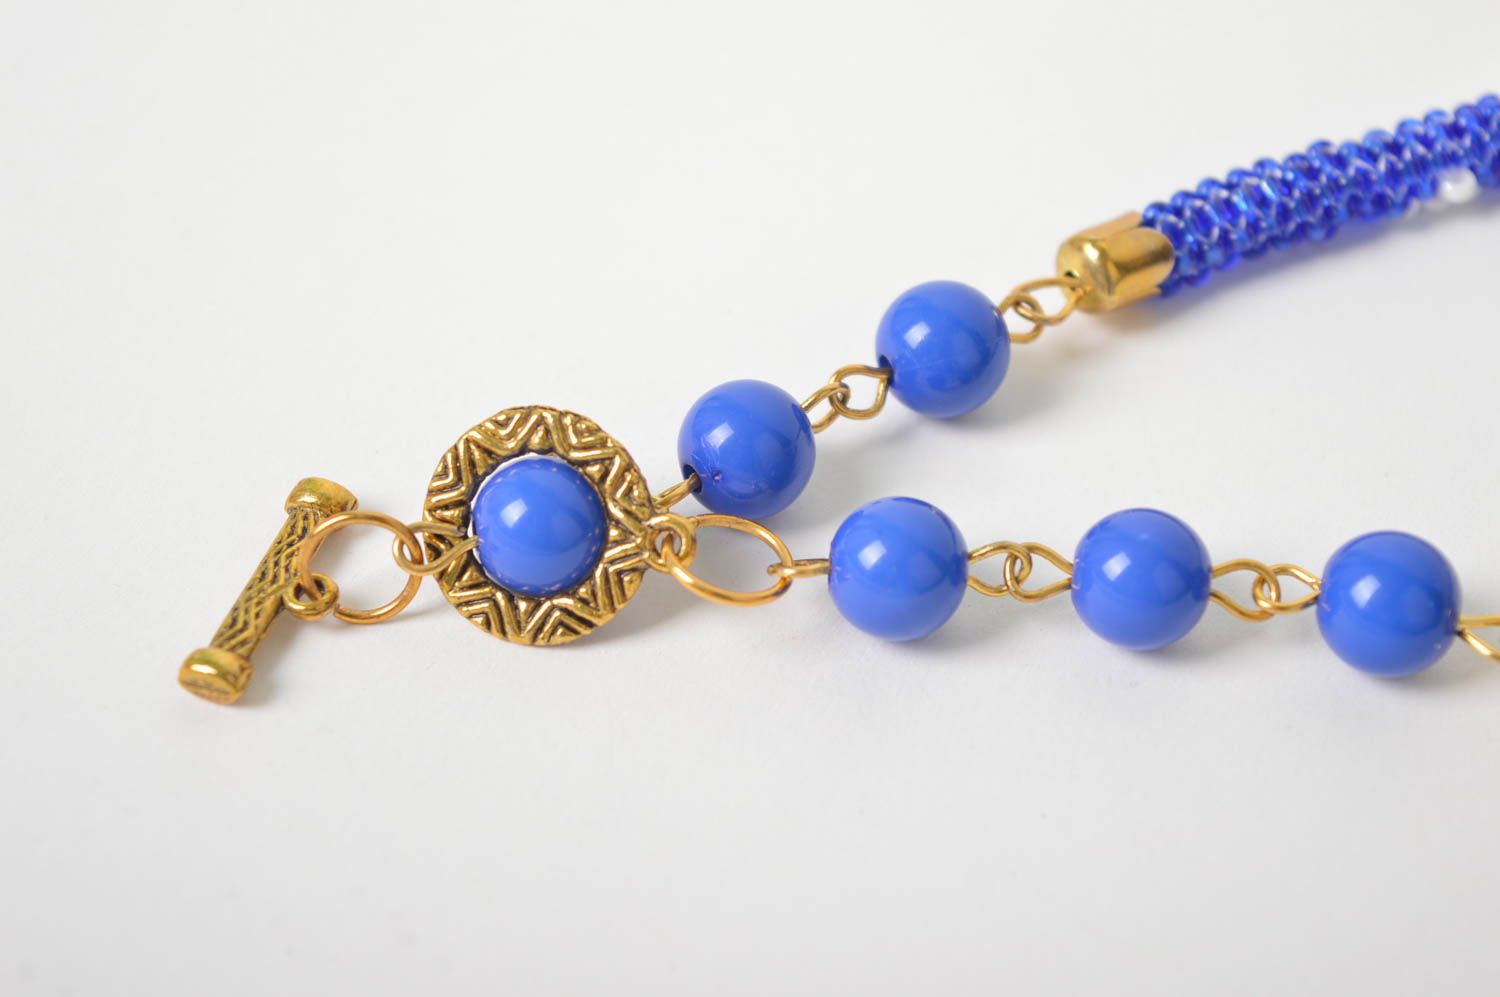 Gentle handmade beaded necklace artisan jewelry designs bead weaving ideas photo 4